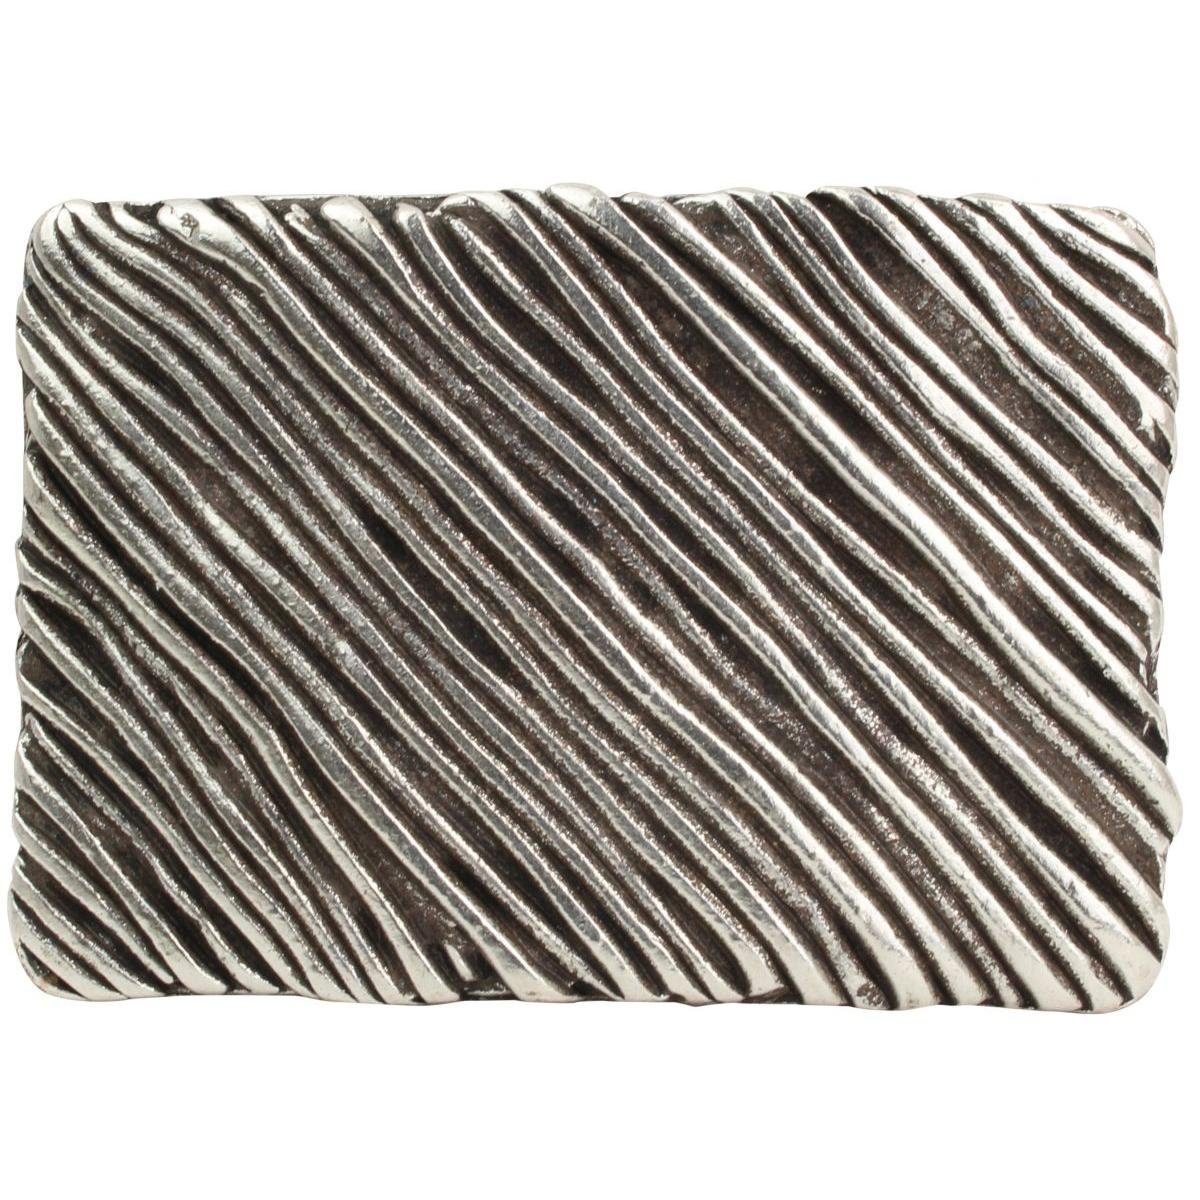 cm 40m Gürtelschnalle Wechselschließe - BELTINGER Gürtelschließe 4,0 Buckle Silber Stripes Superficial